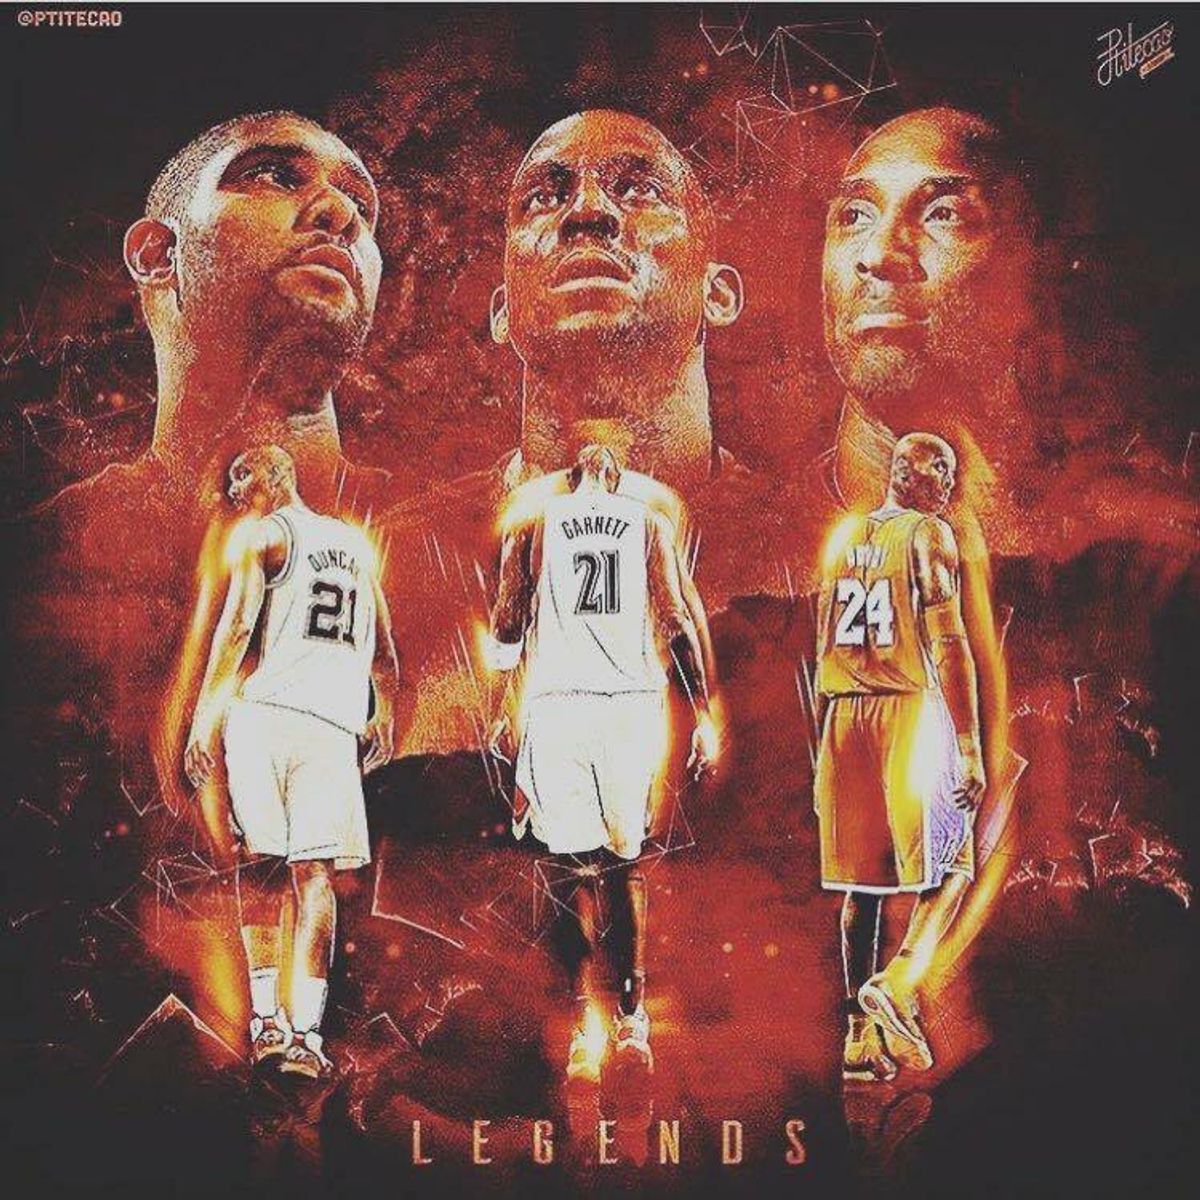 A Trio Of Legends: Kevin Garnett, Kobe Bryant, And Tim Duncan